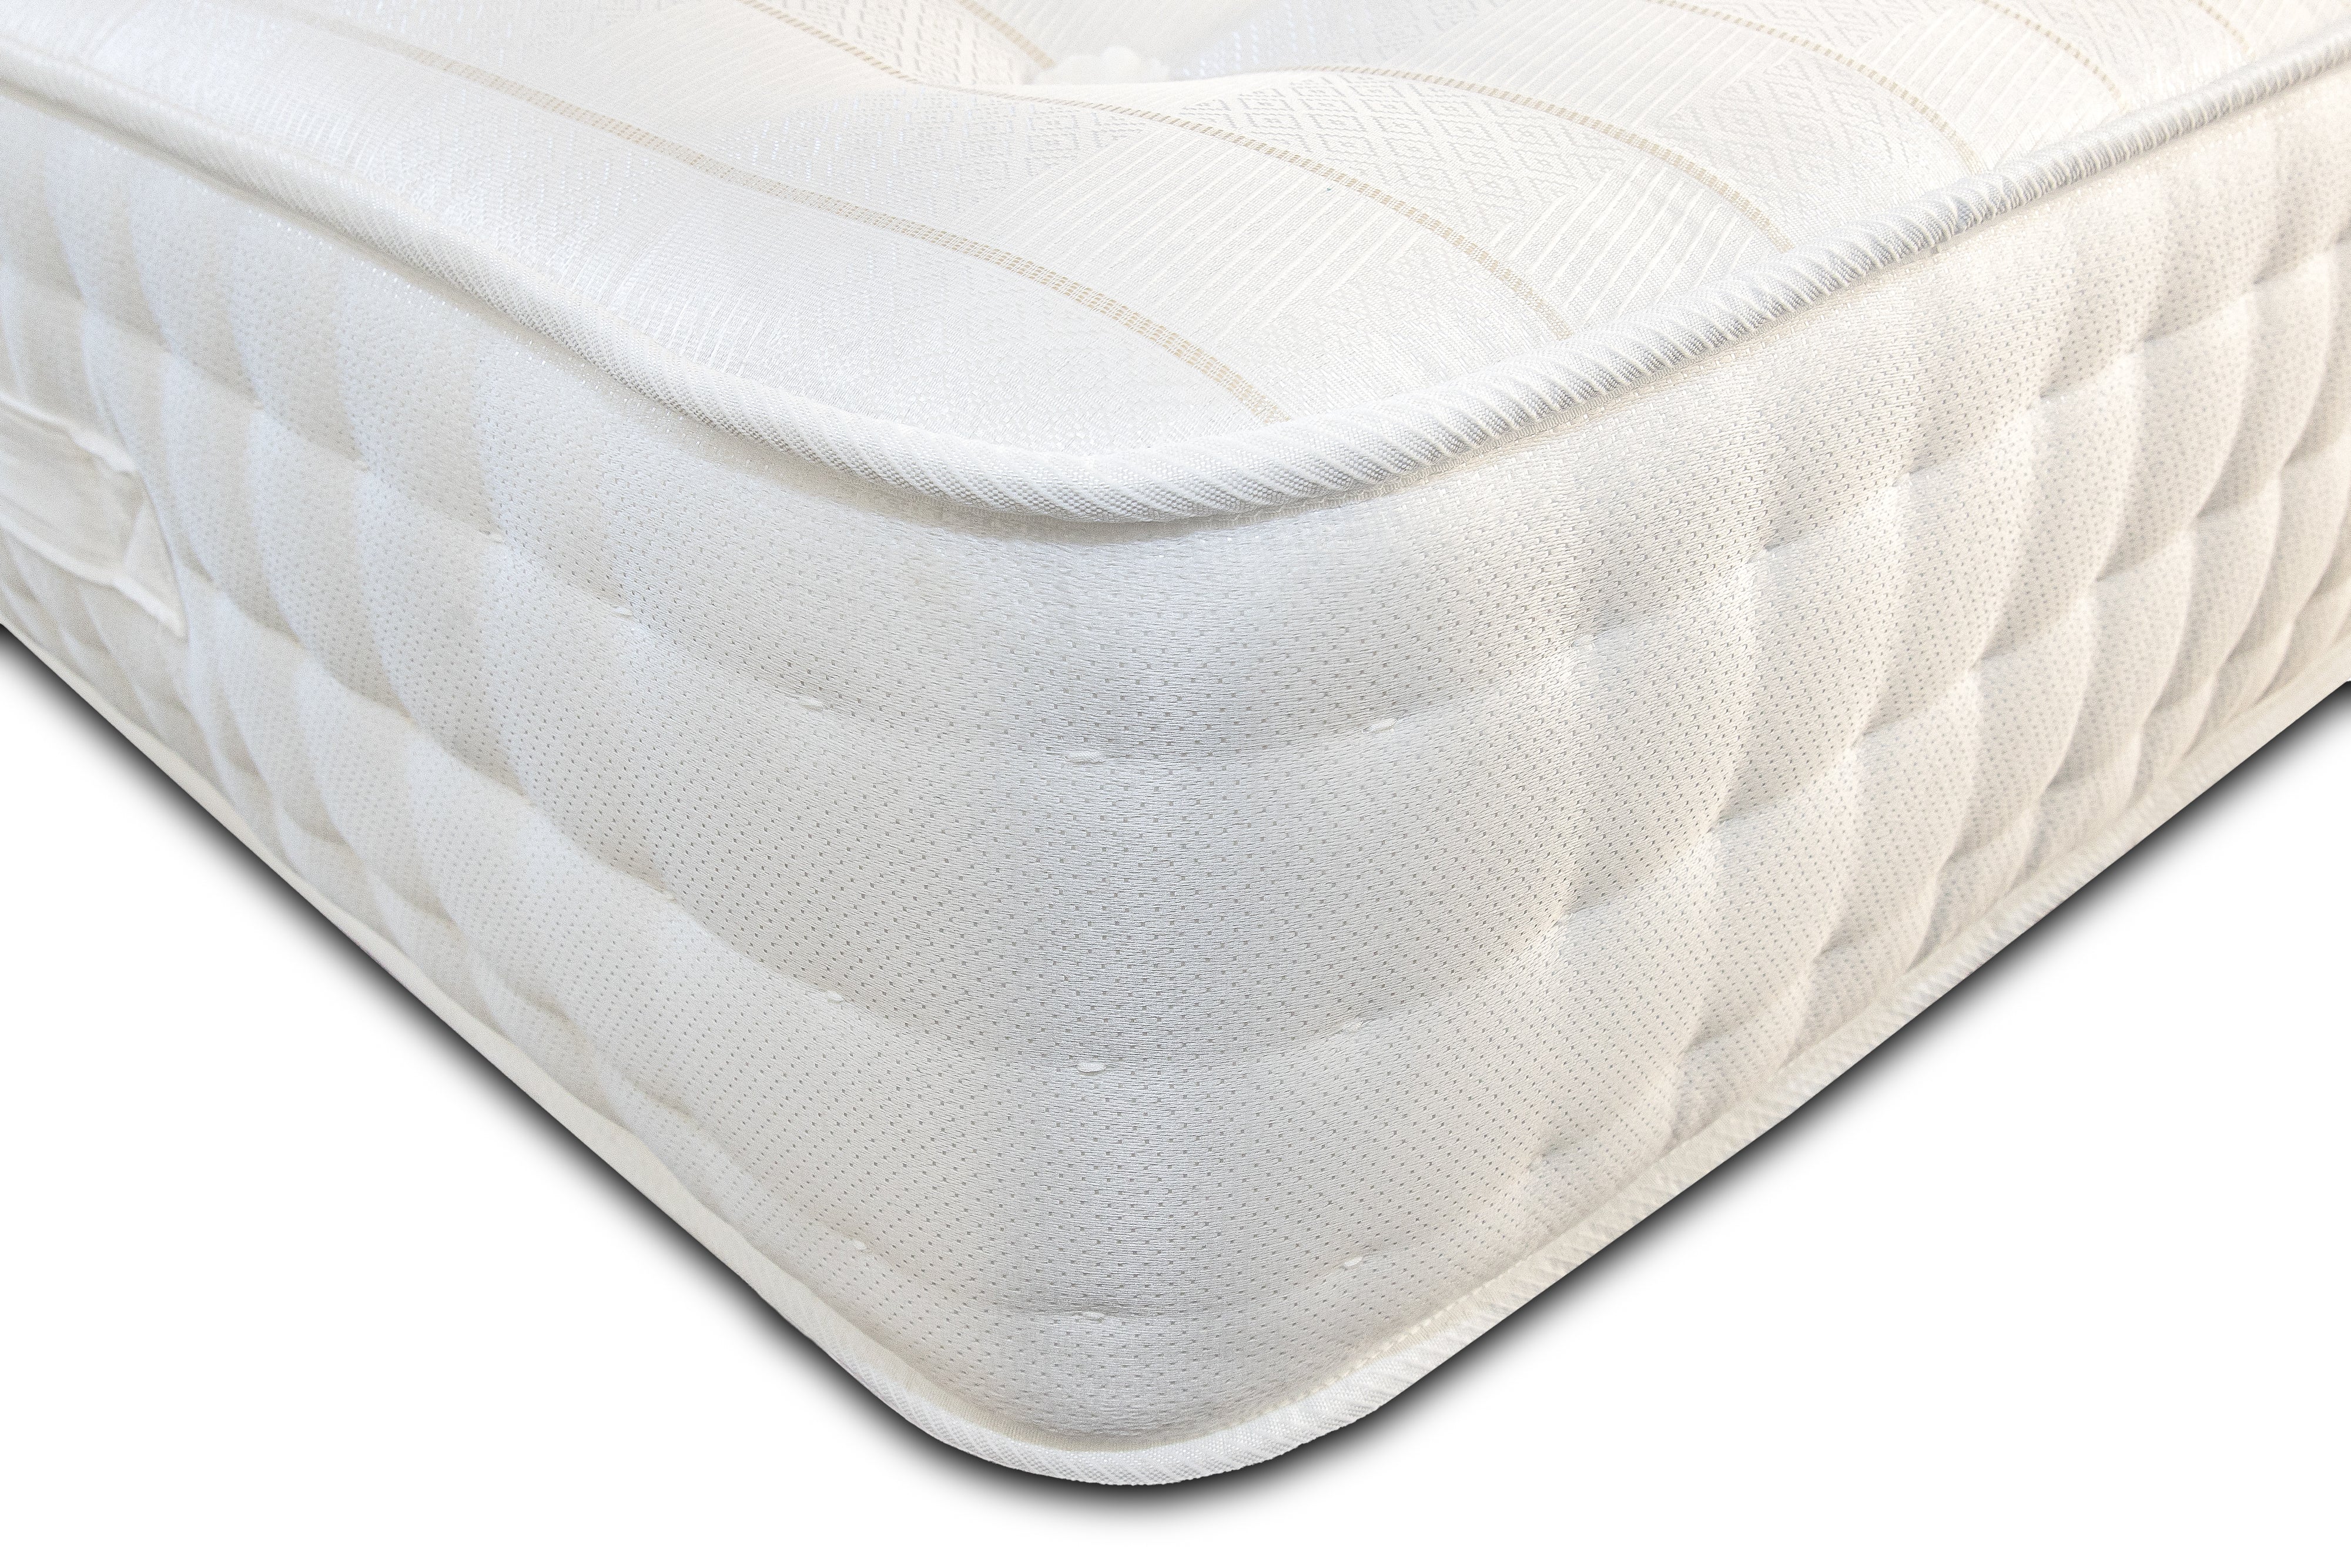 sleep story ortho pocket 1000 mattress review